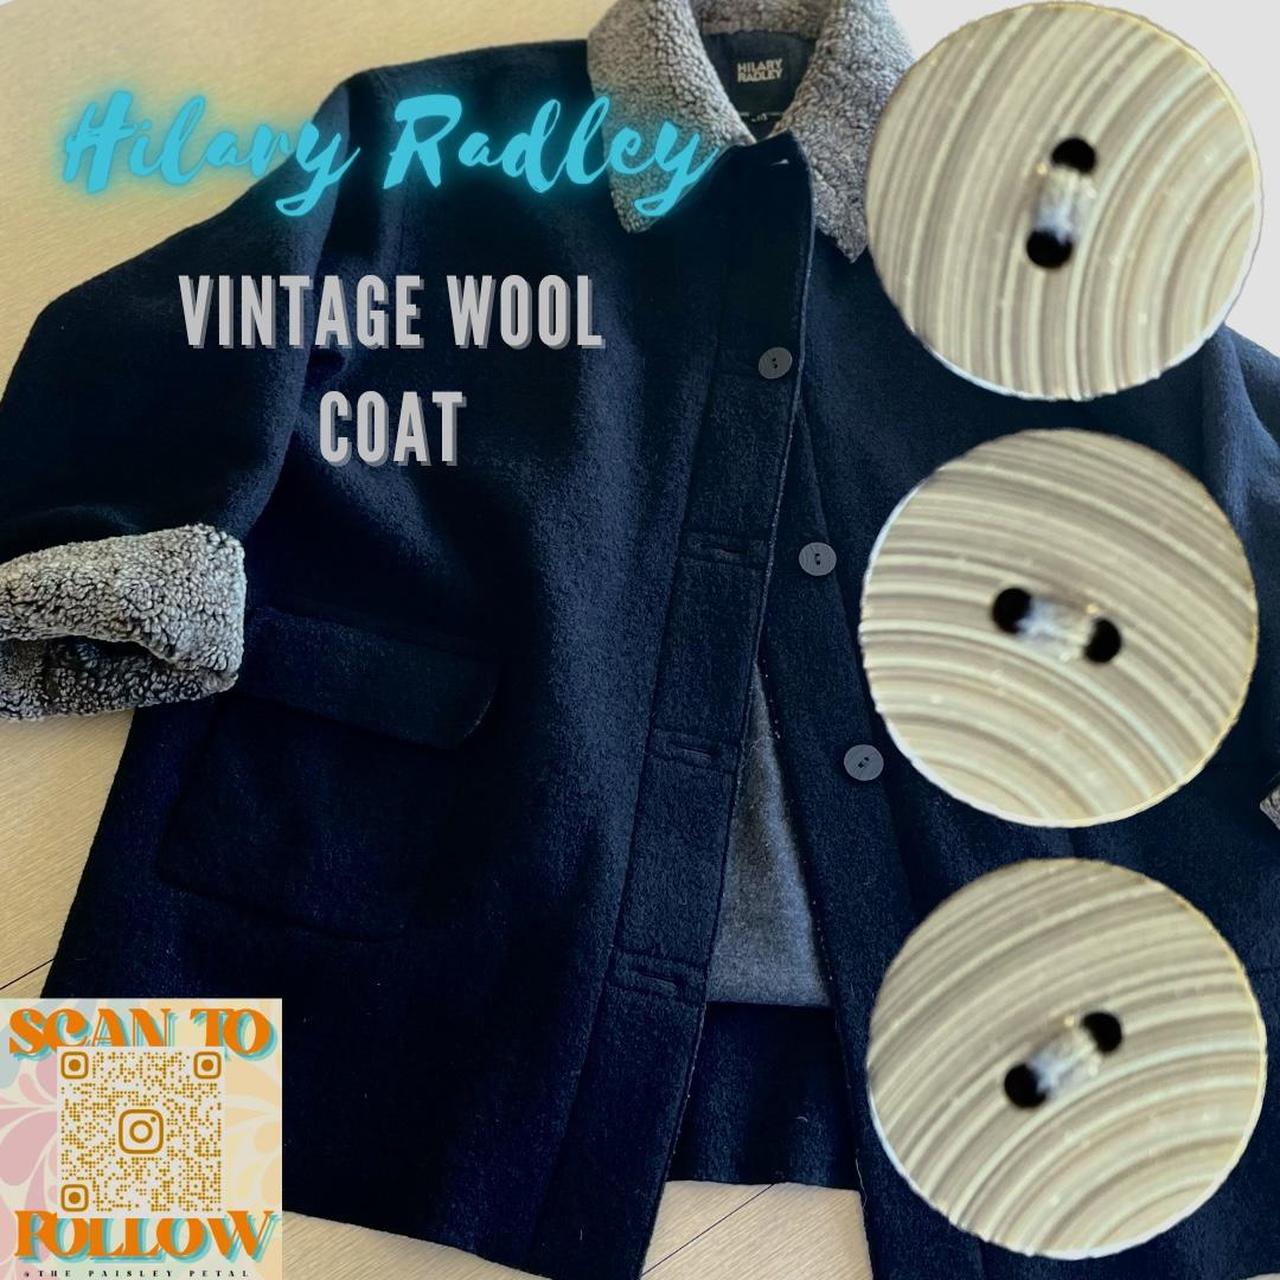 Hilary Radley Wool Coats & Jackets